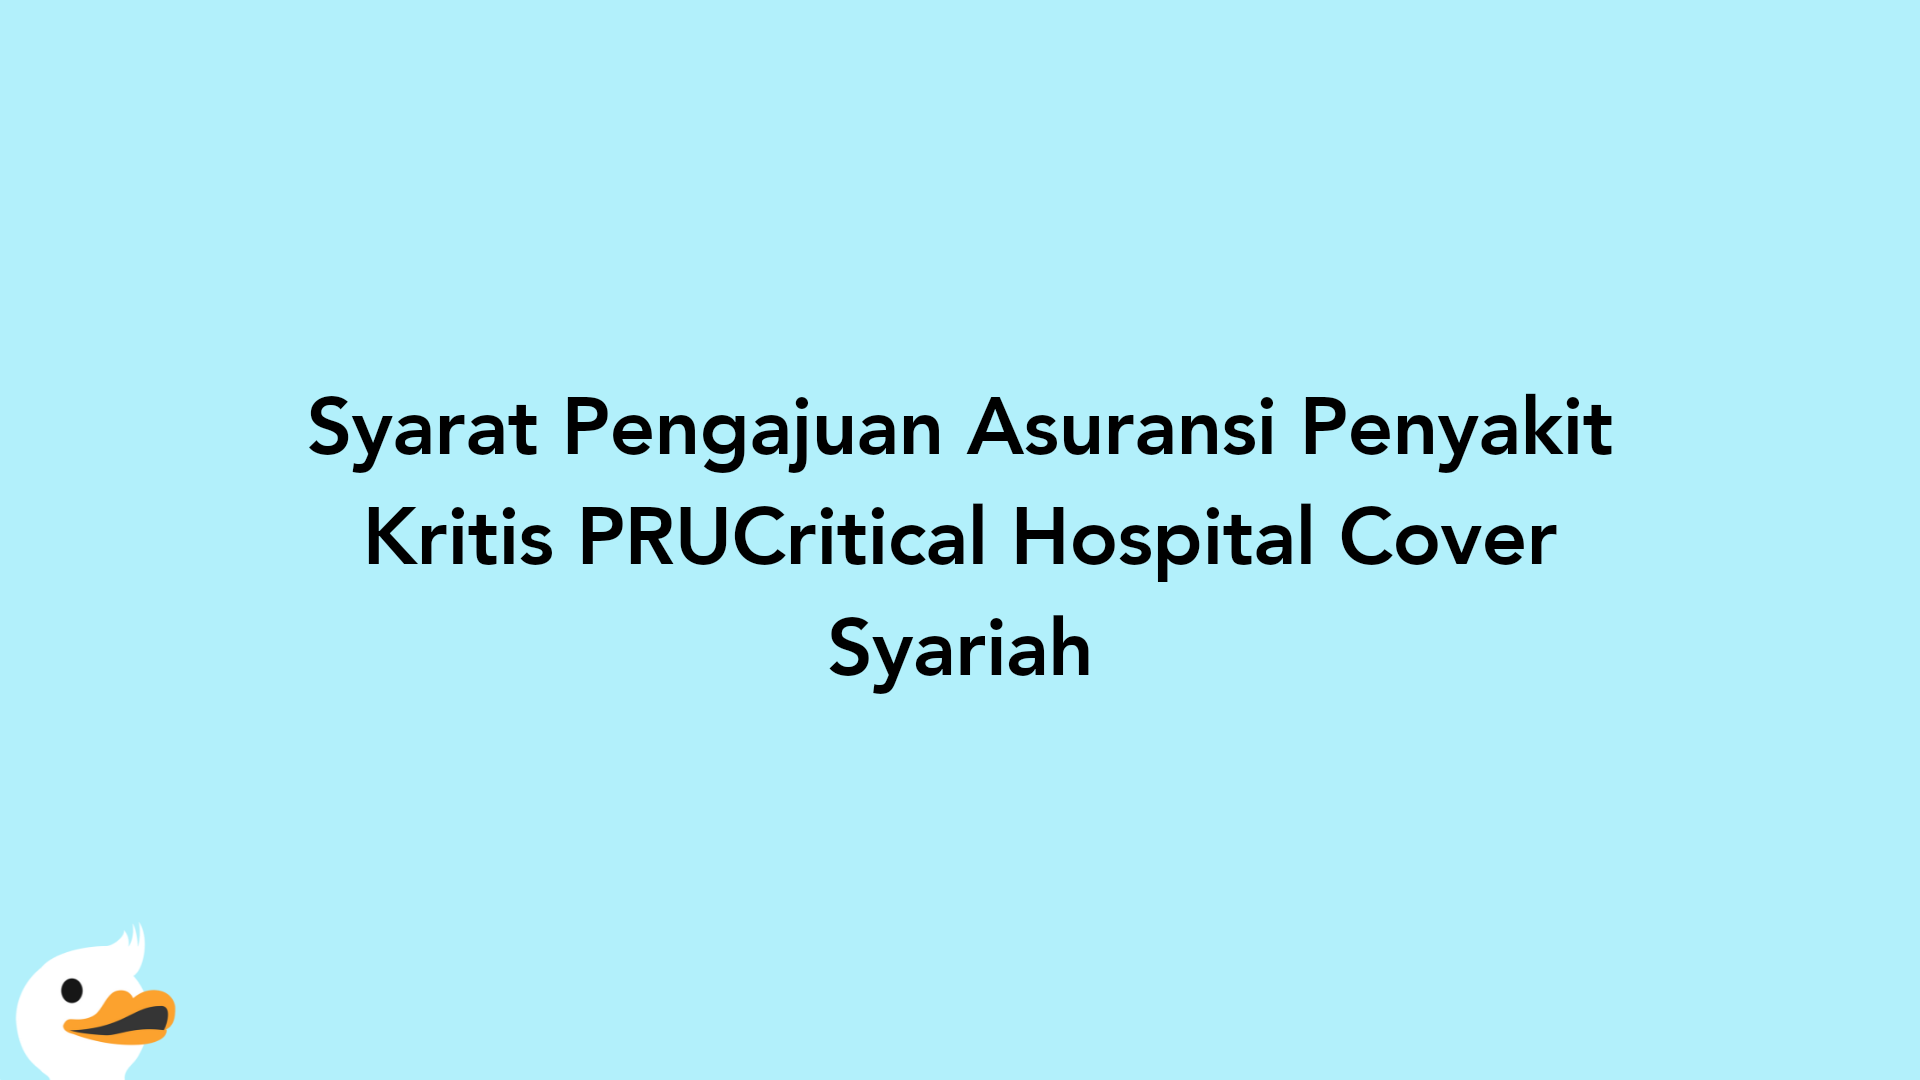 Syarat Pengajuan Asuransi Penyakit Kritis PRUCritical Hospital Cover Syariah